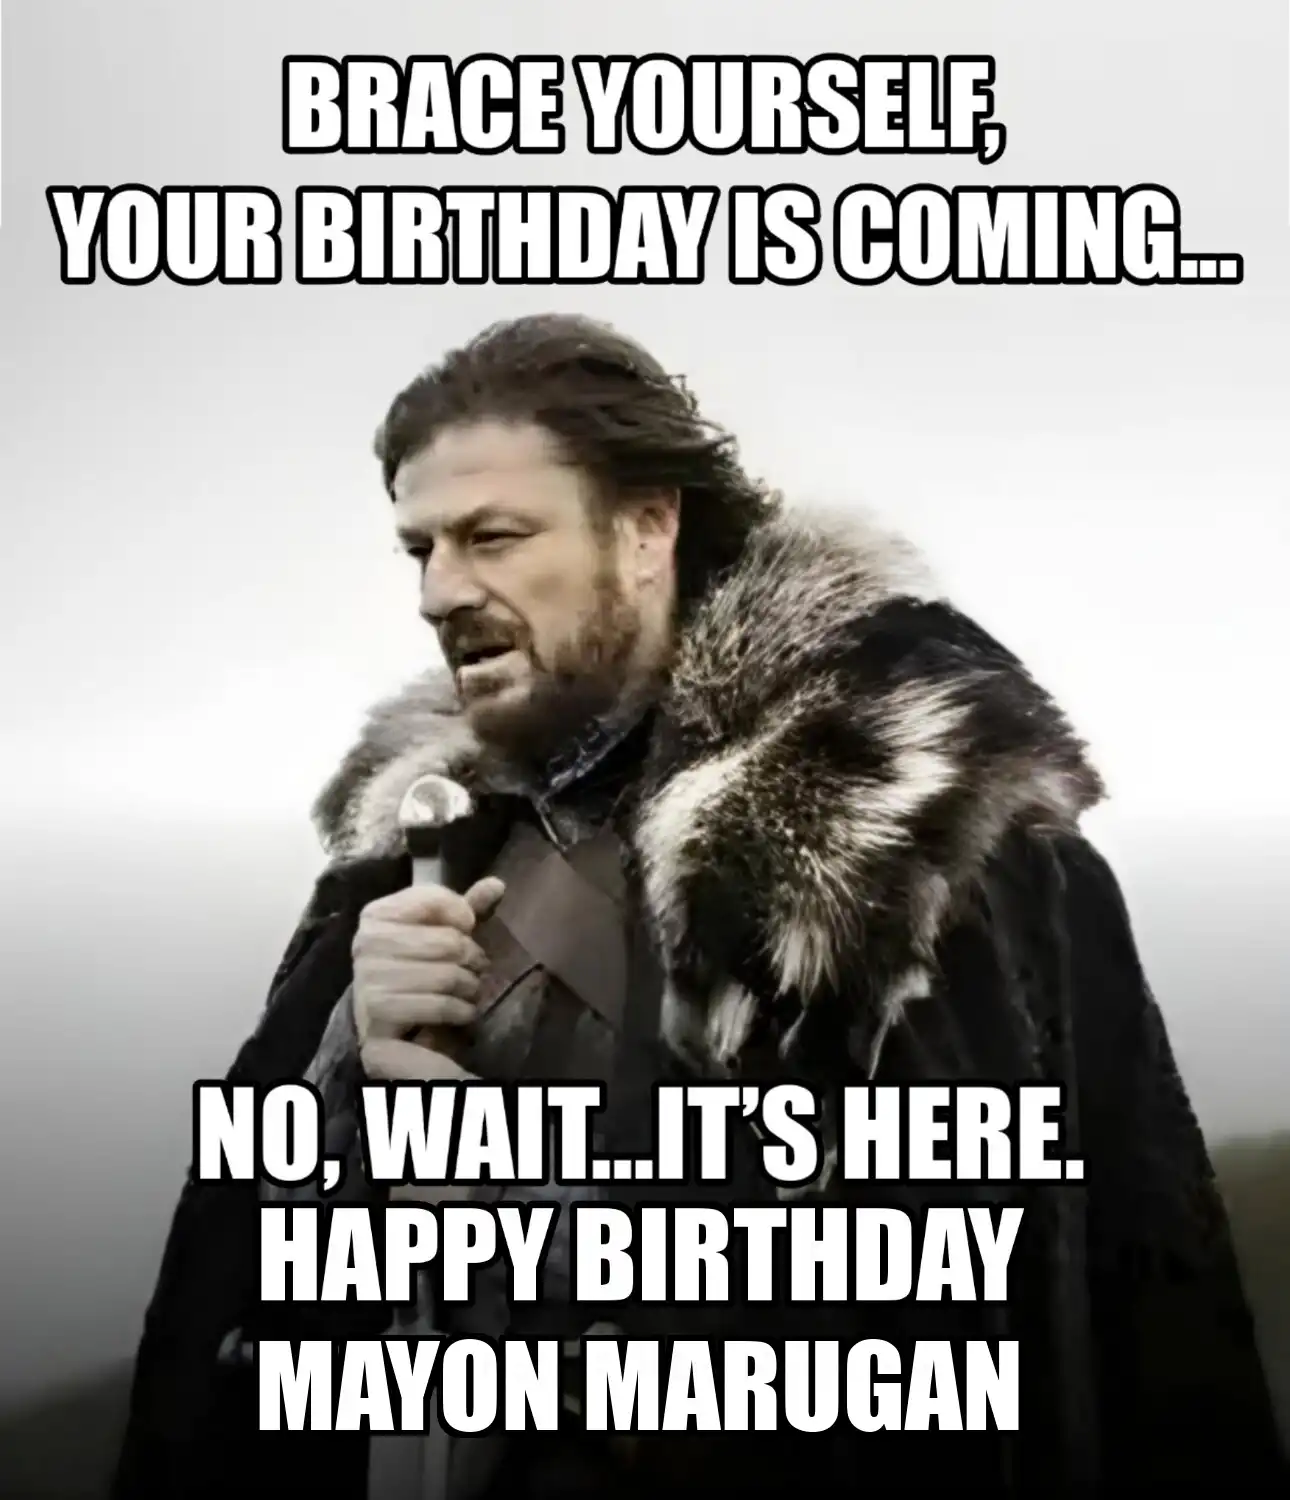 Happy Birthday Mayon Marugan Brace Yourself Your Birthday Is Coming Meme